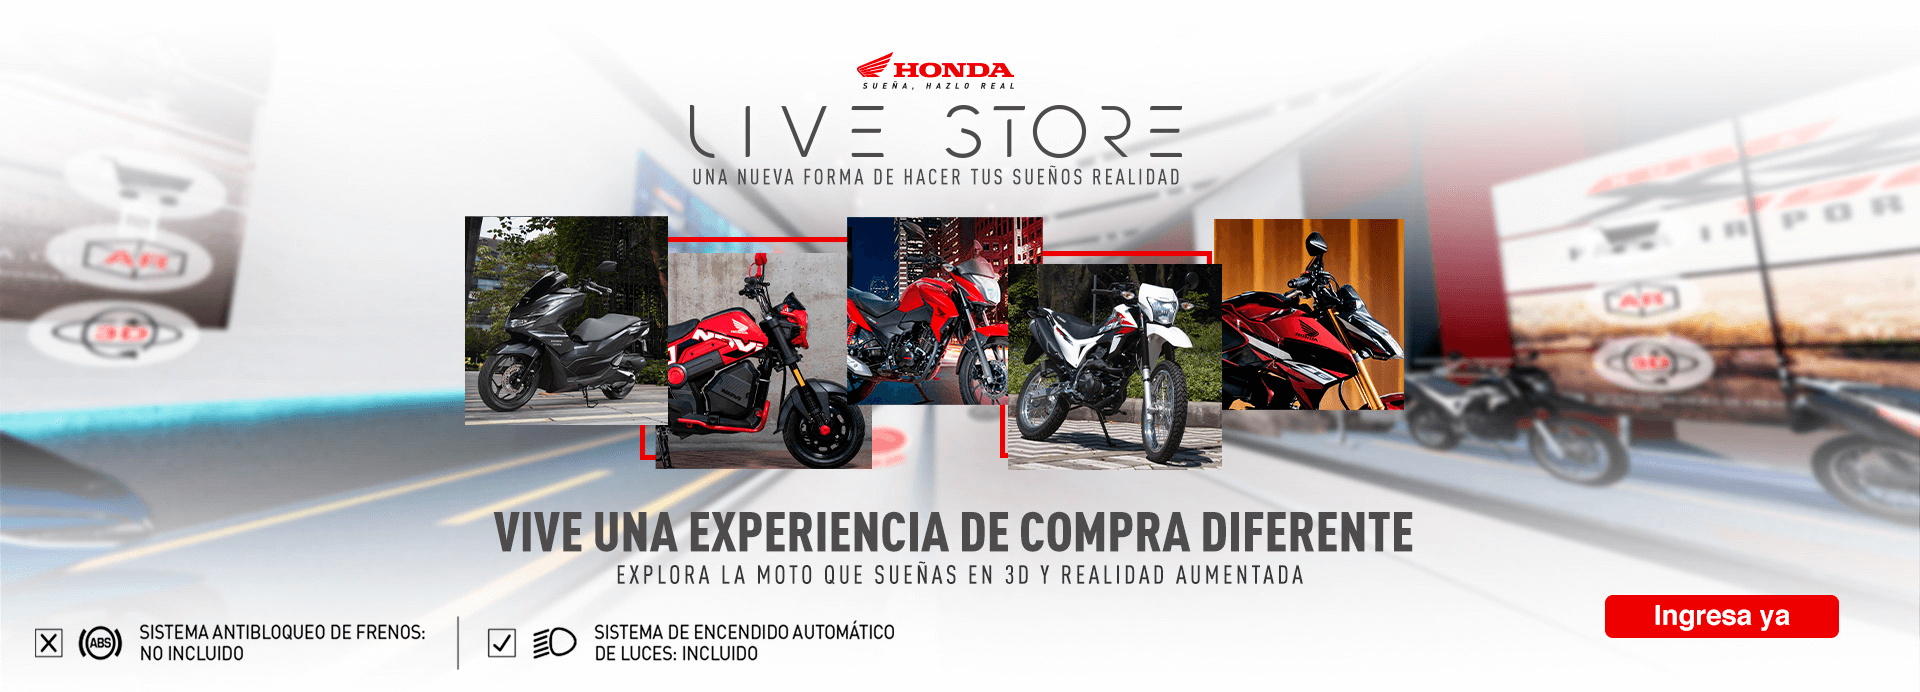 Live Store Experiencia de comprar moto Honda